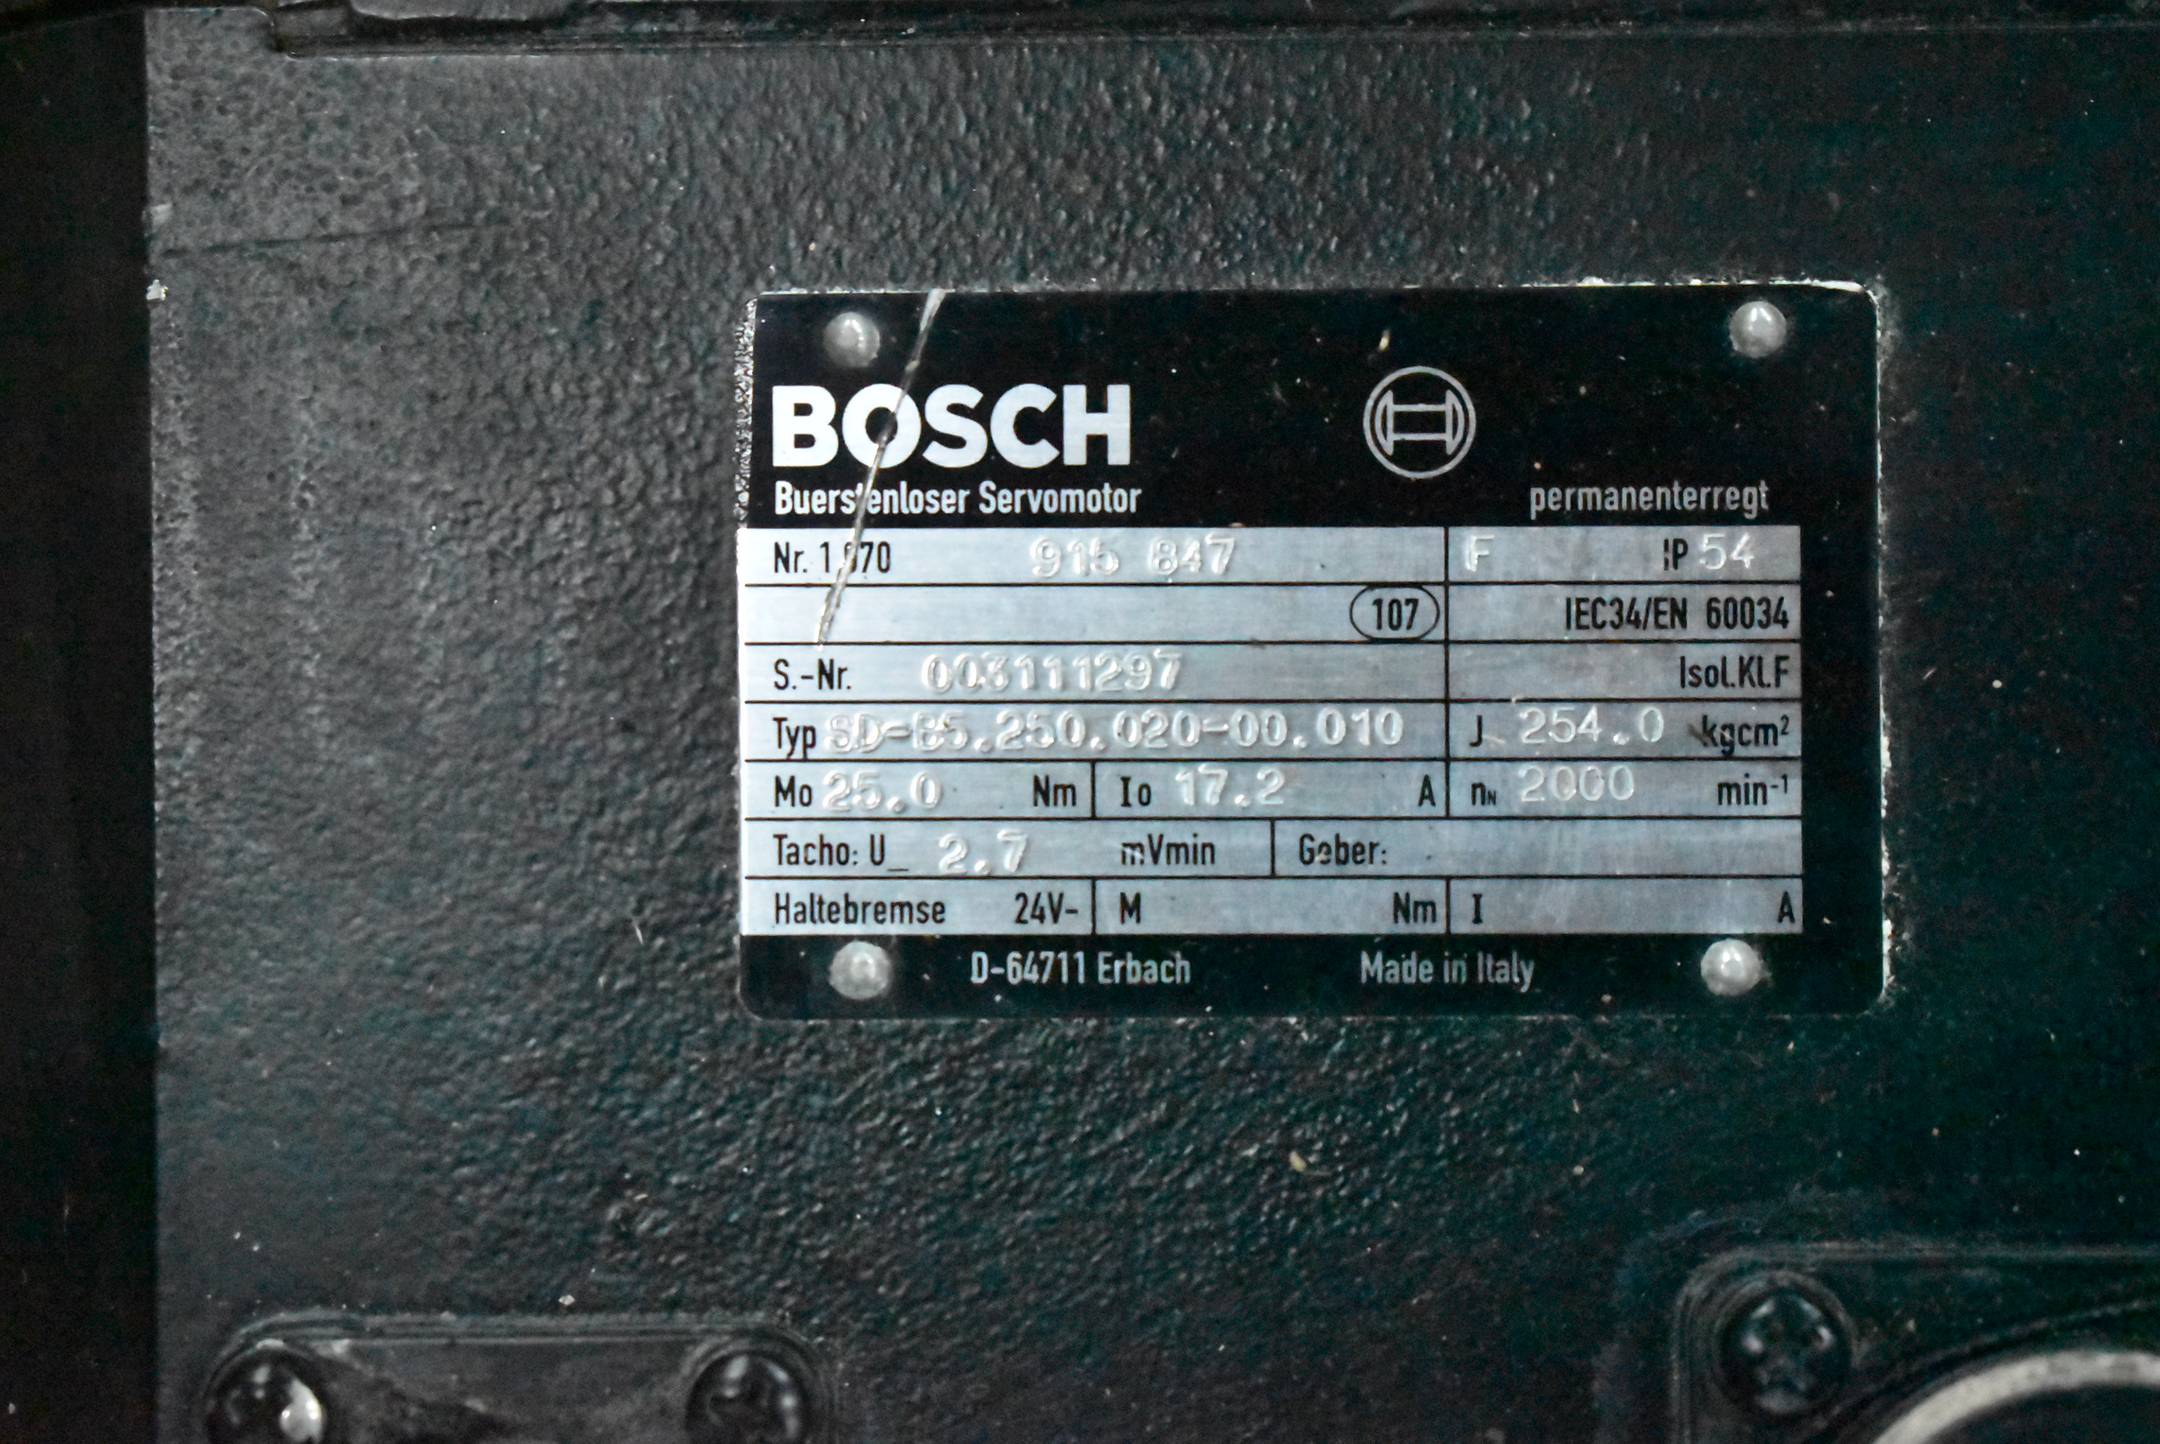 Bosch Servomotor 25,0Nm 17,2A  2000rpm SD-B5.250.020-00.010